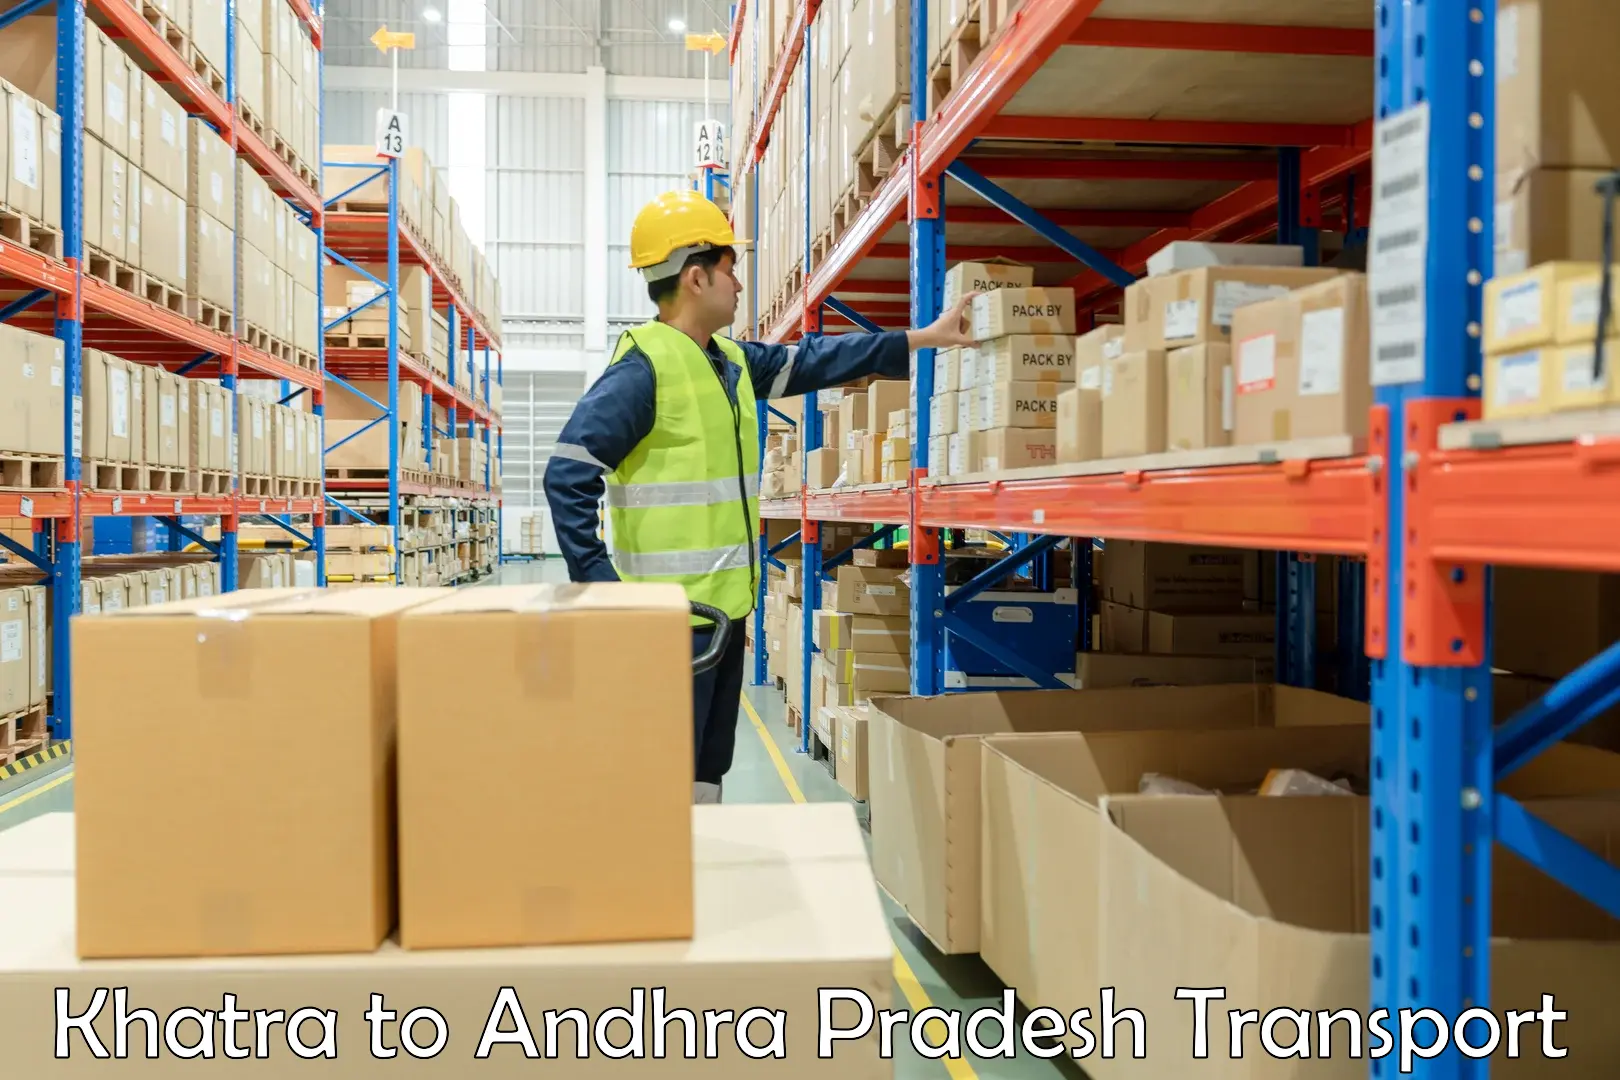 Truck transport companies in India Khatra to Andhra Pradesh